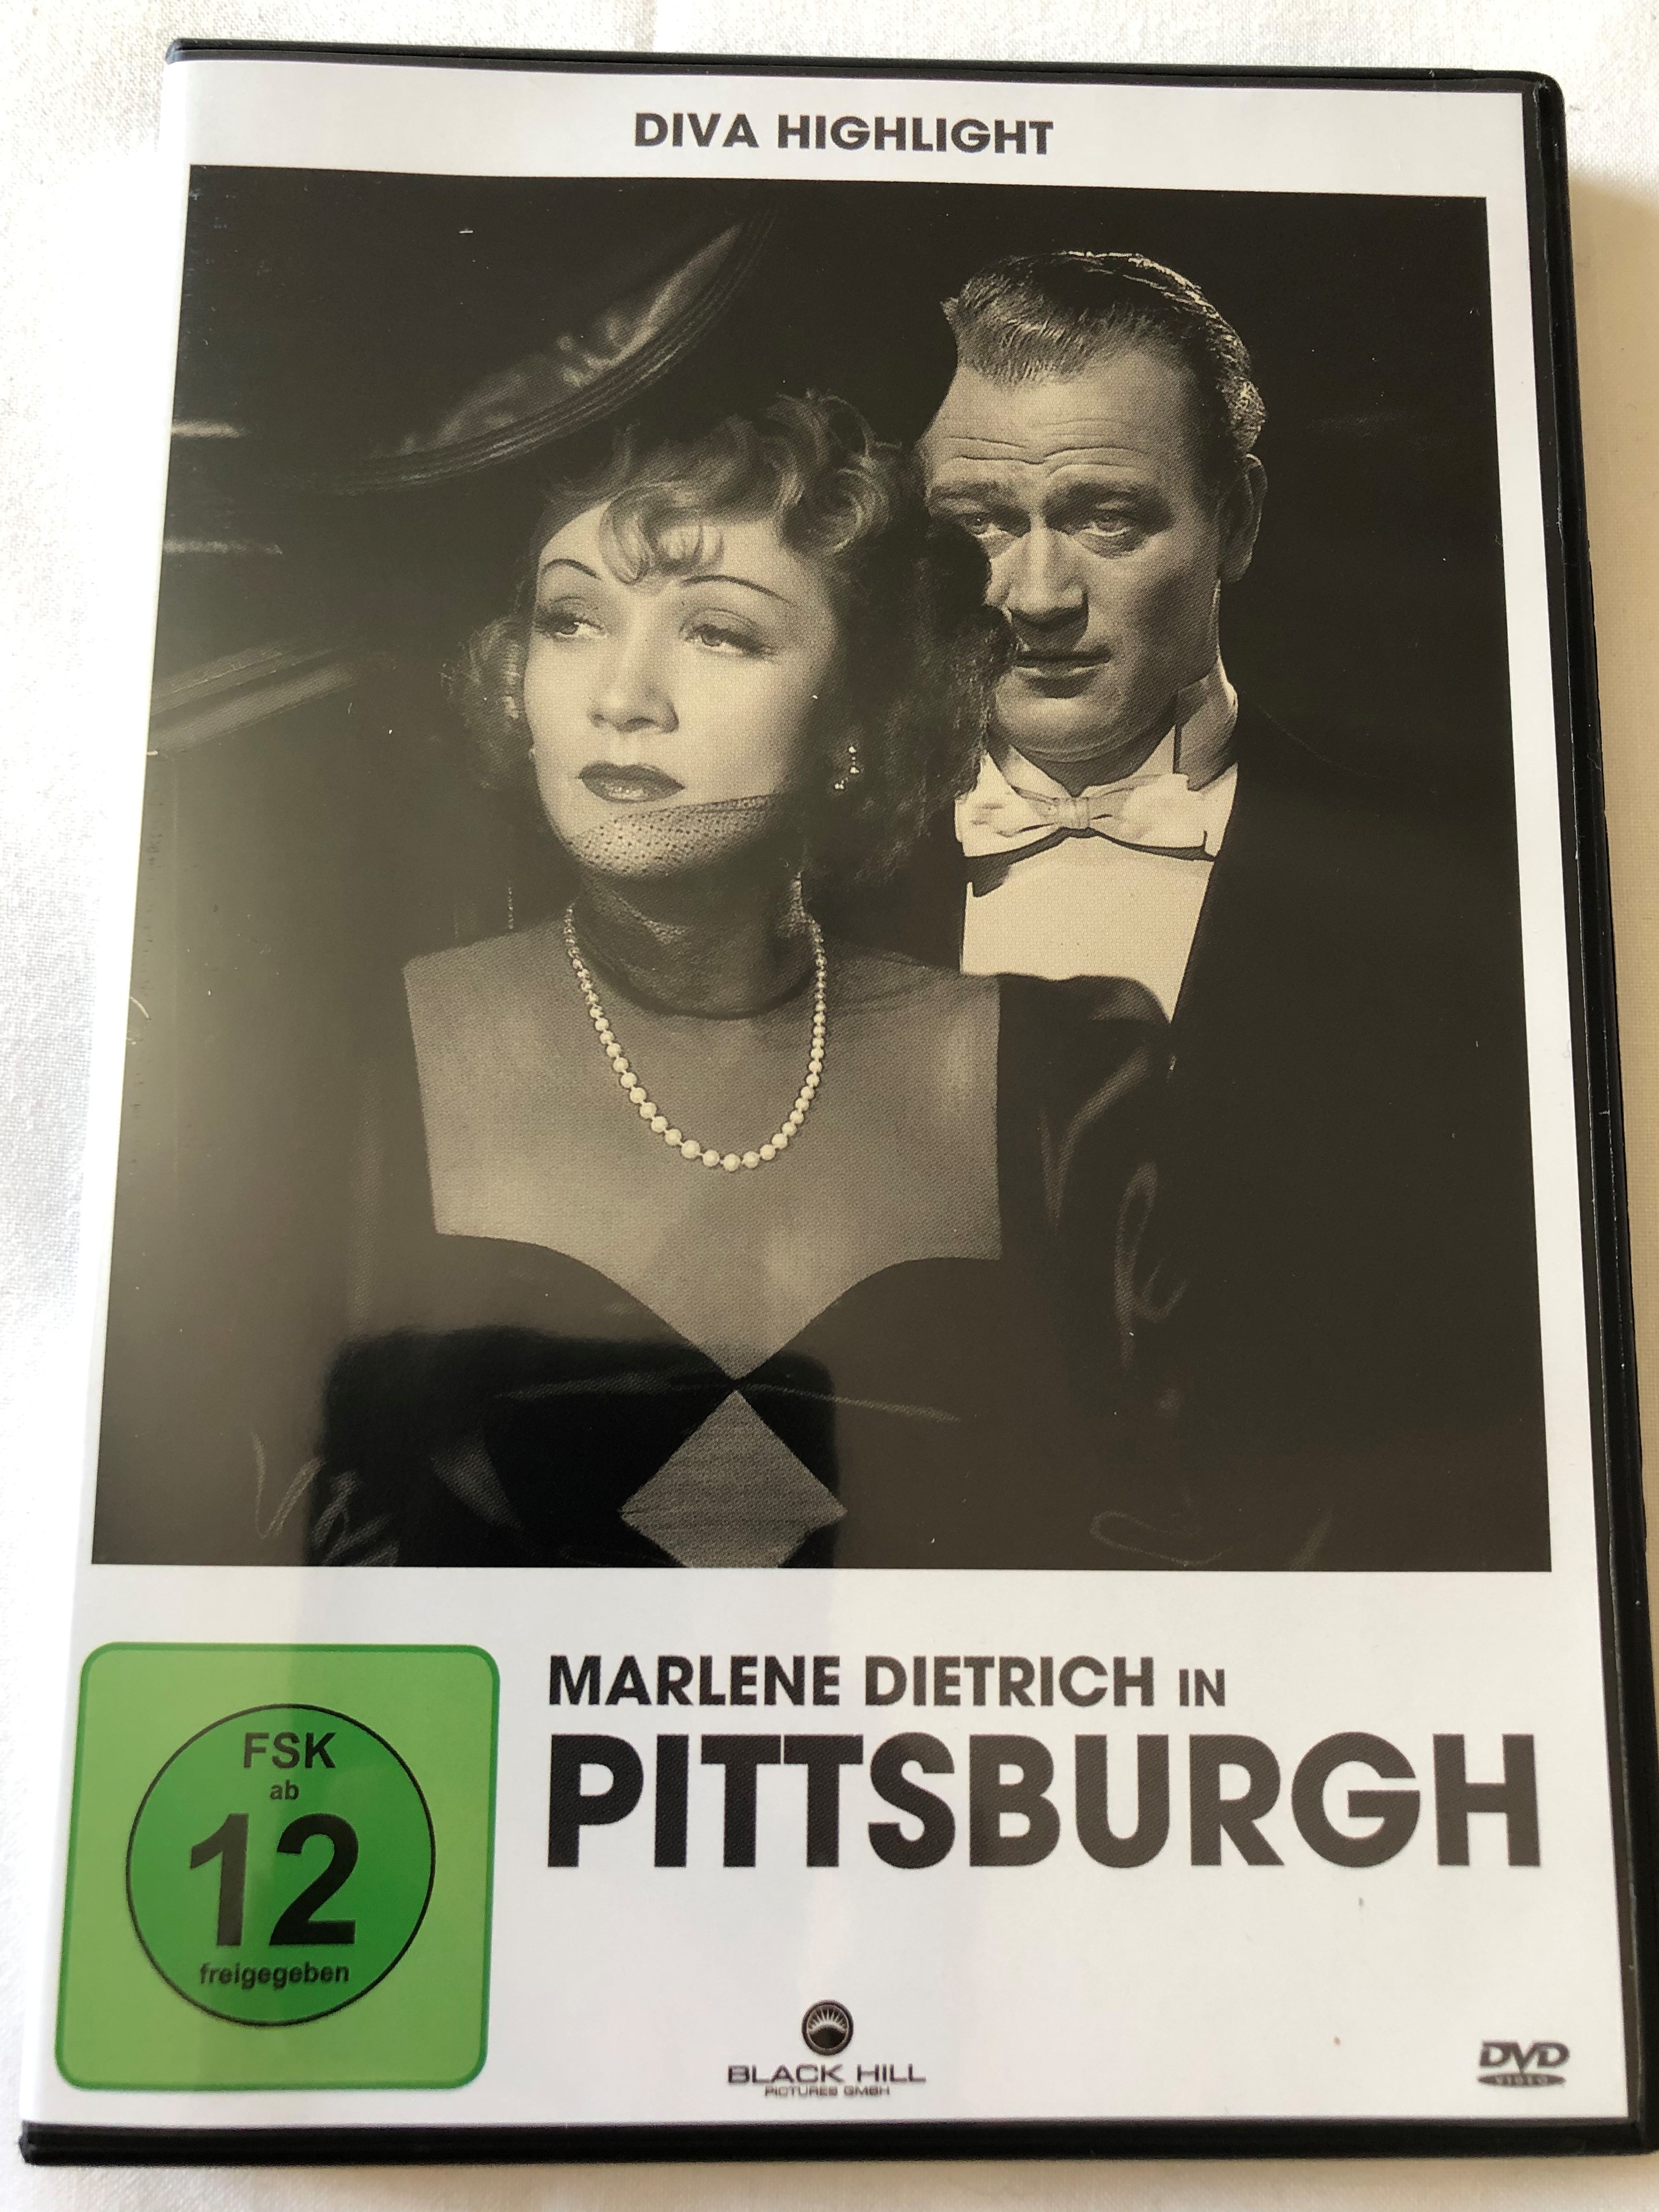 pittsburgh-dvd-1942-directed-by-lewis-seiler-starring-marlene-dietrich-diva-highlight-1-.jpg